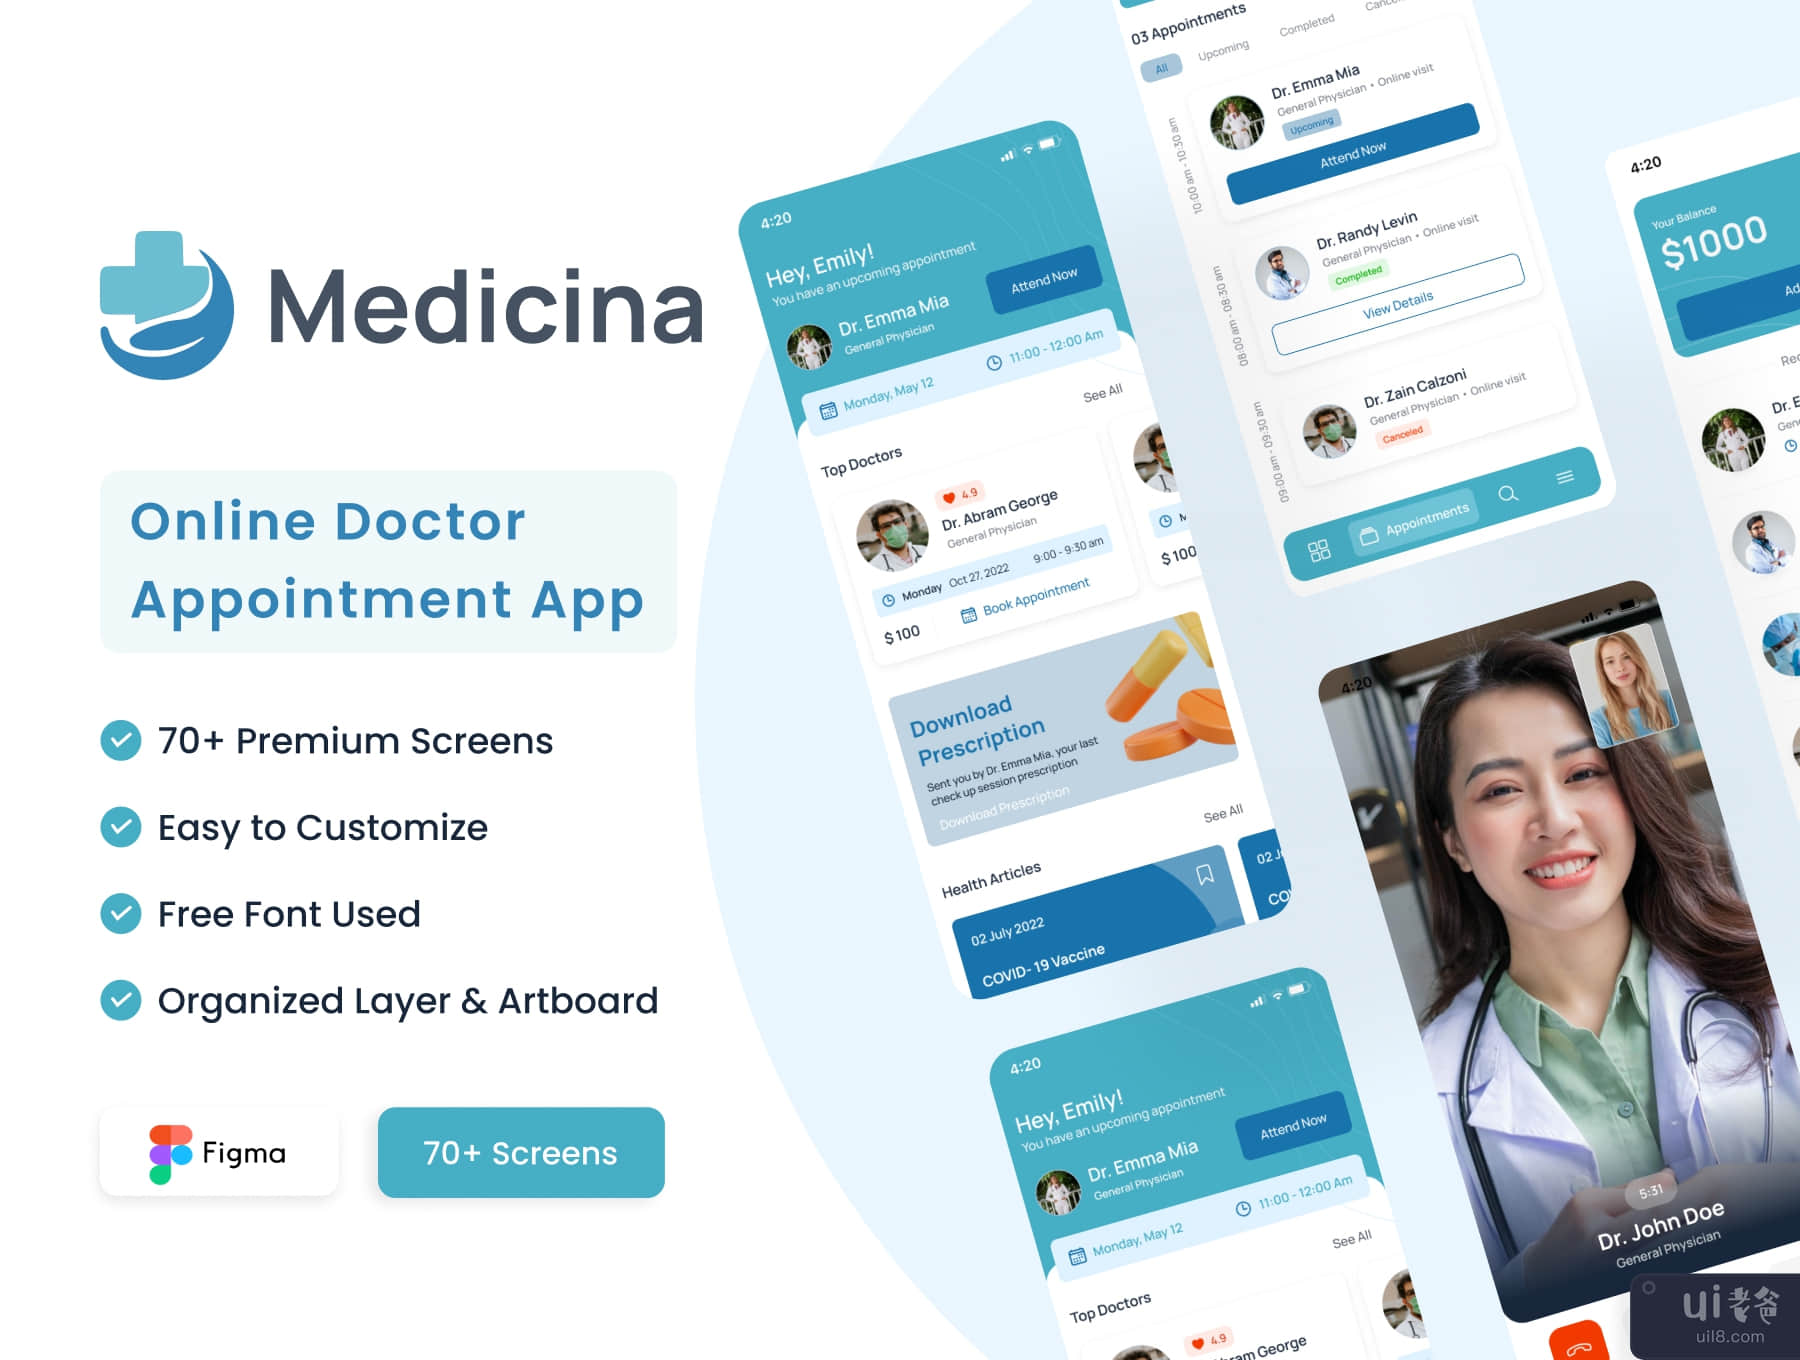 Medicina - 在线医生预约应用程序 UI 工具包 (Medicina - Online Doctor Appointment App UI Kit)插图5